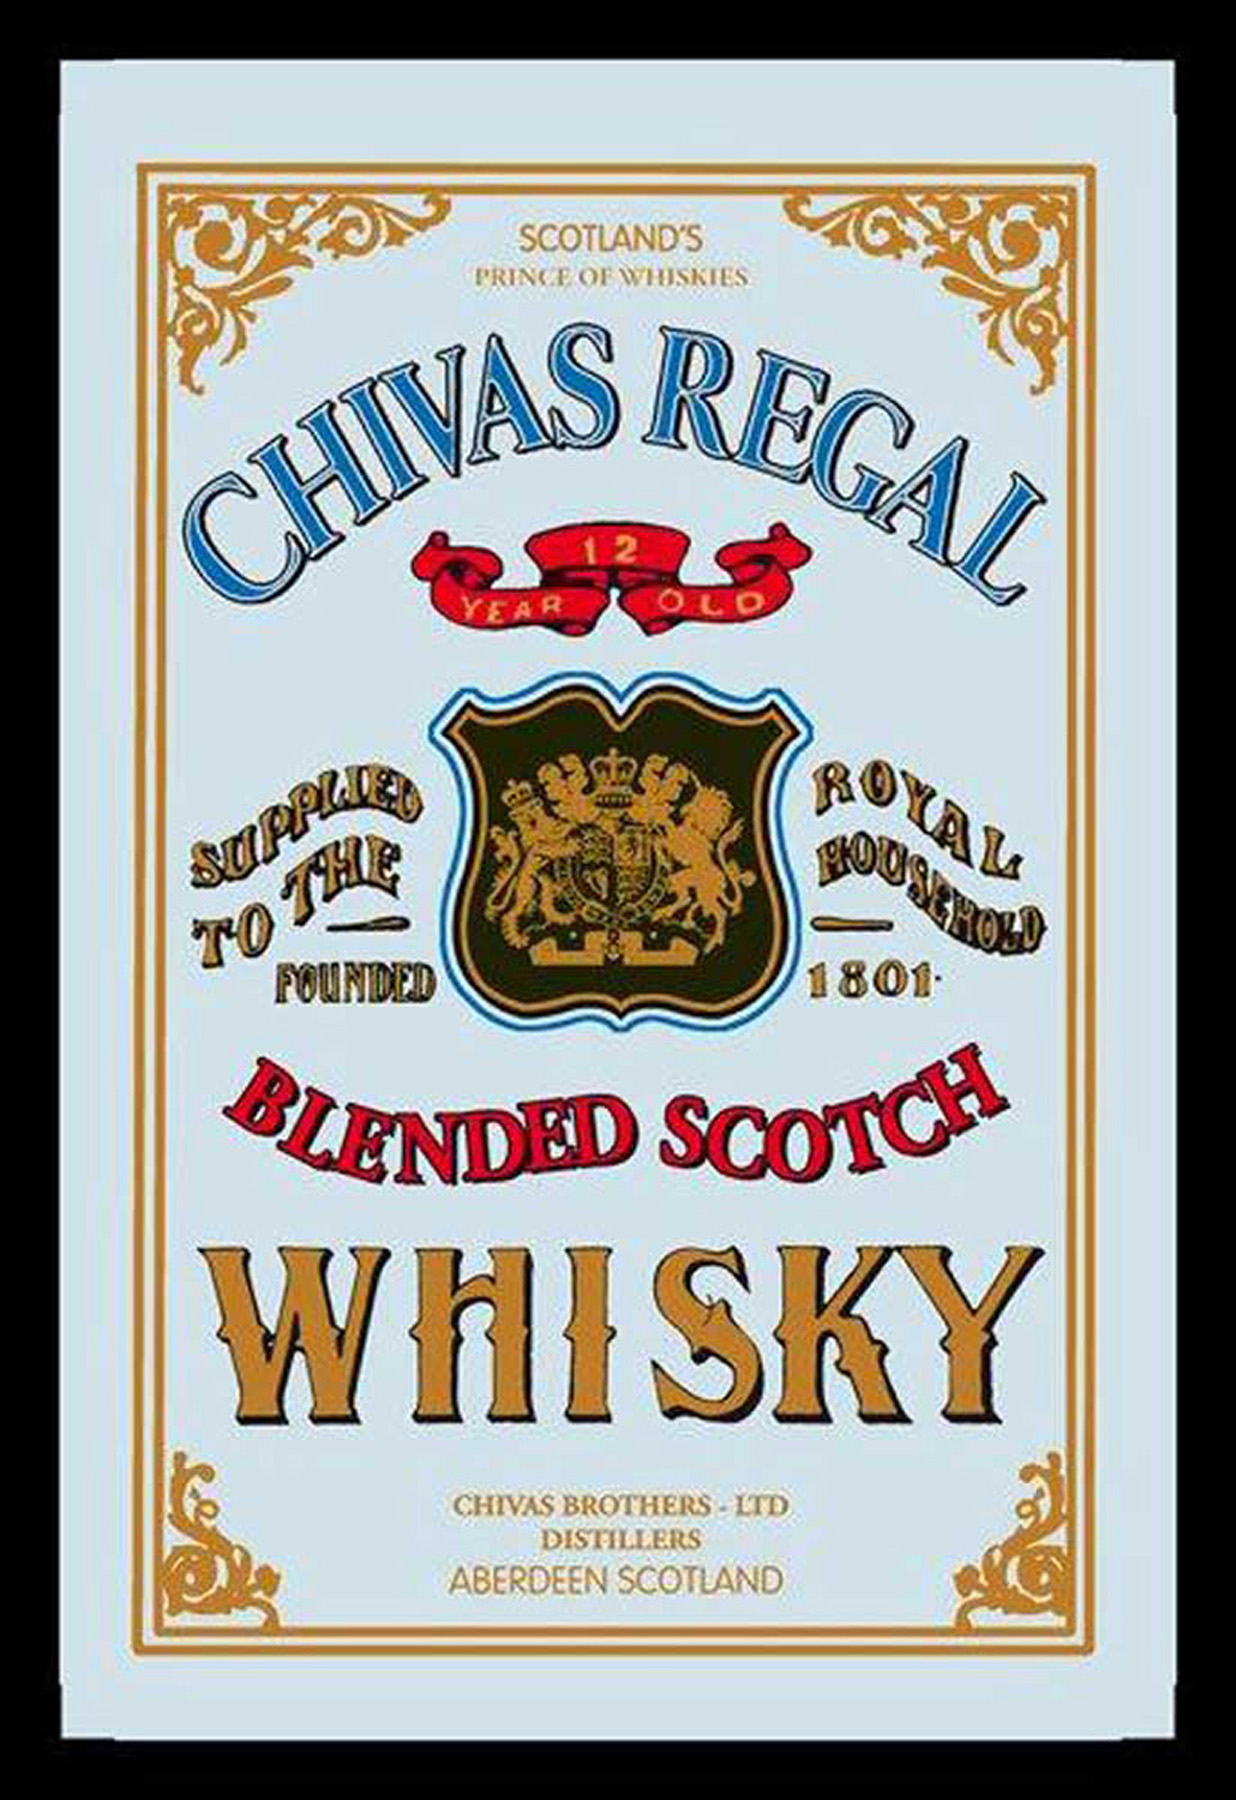 Chivas Regal - Whisky